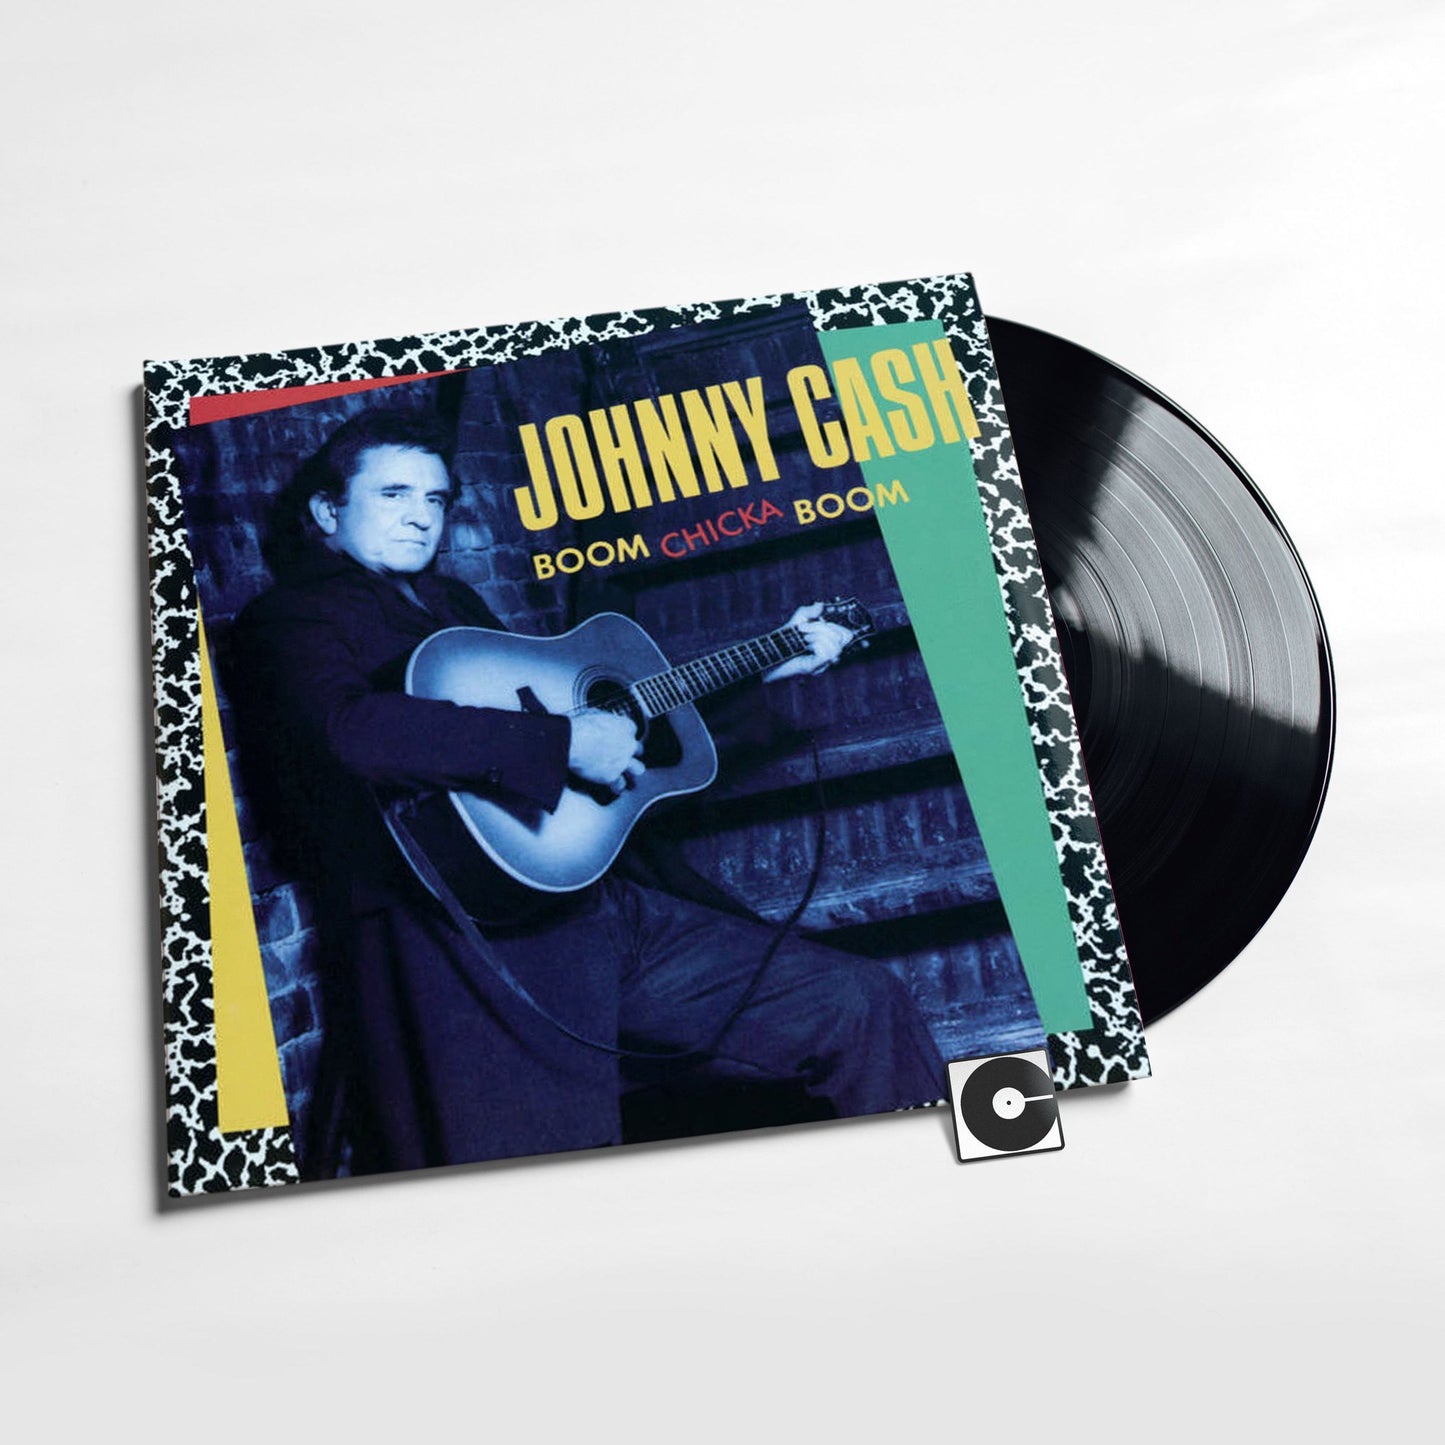 Johnny Cash - "Boom Chicka Boom"